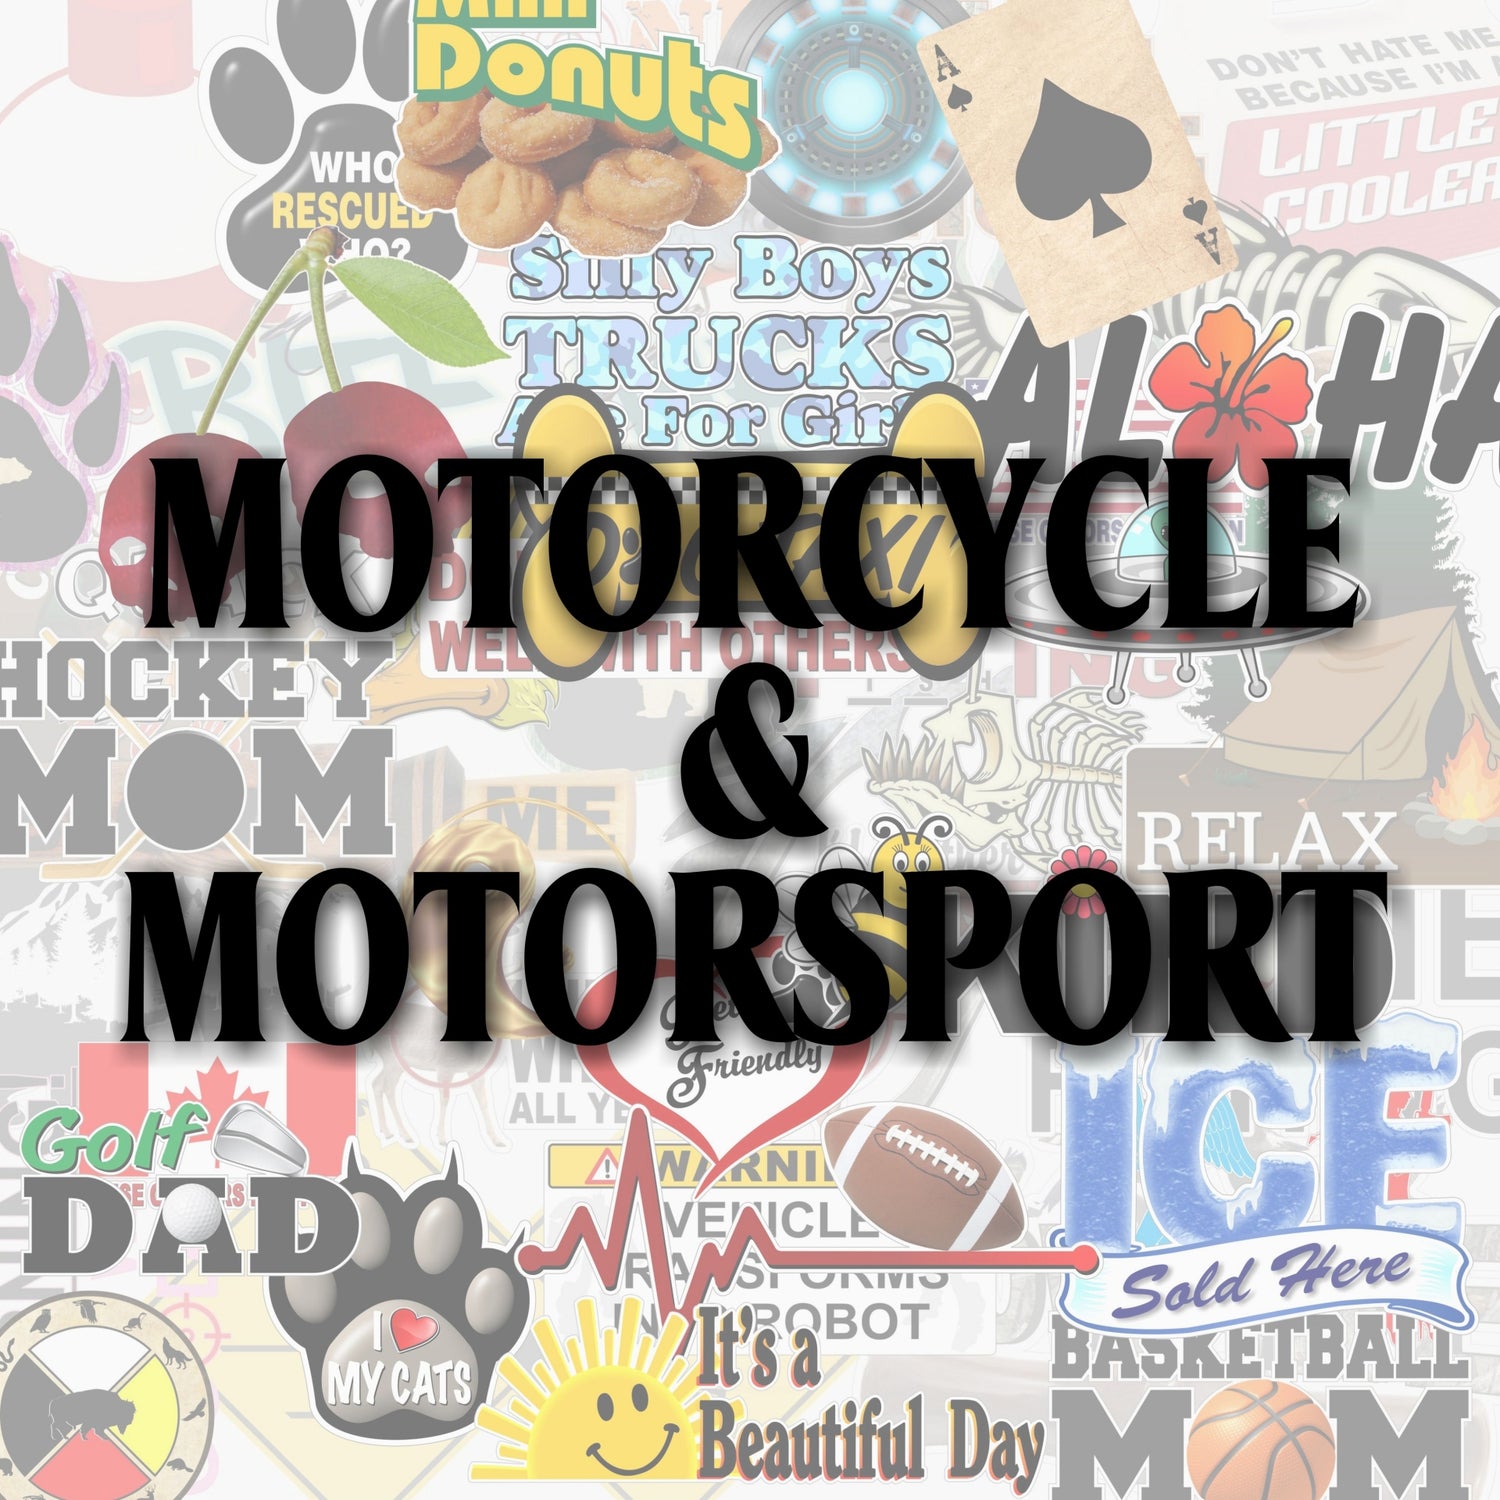 Motorcycle & Motorsport